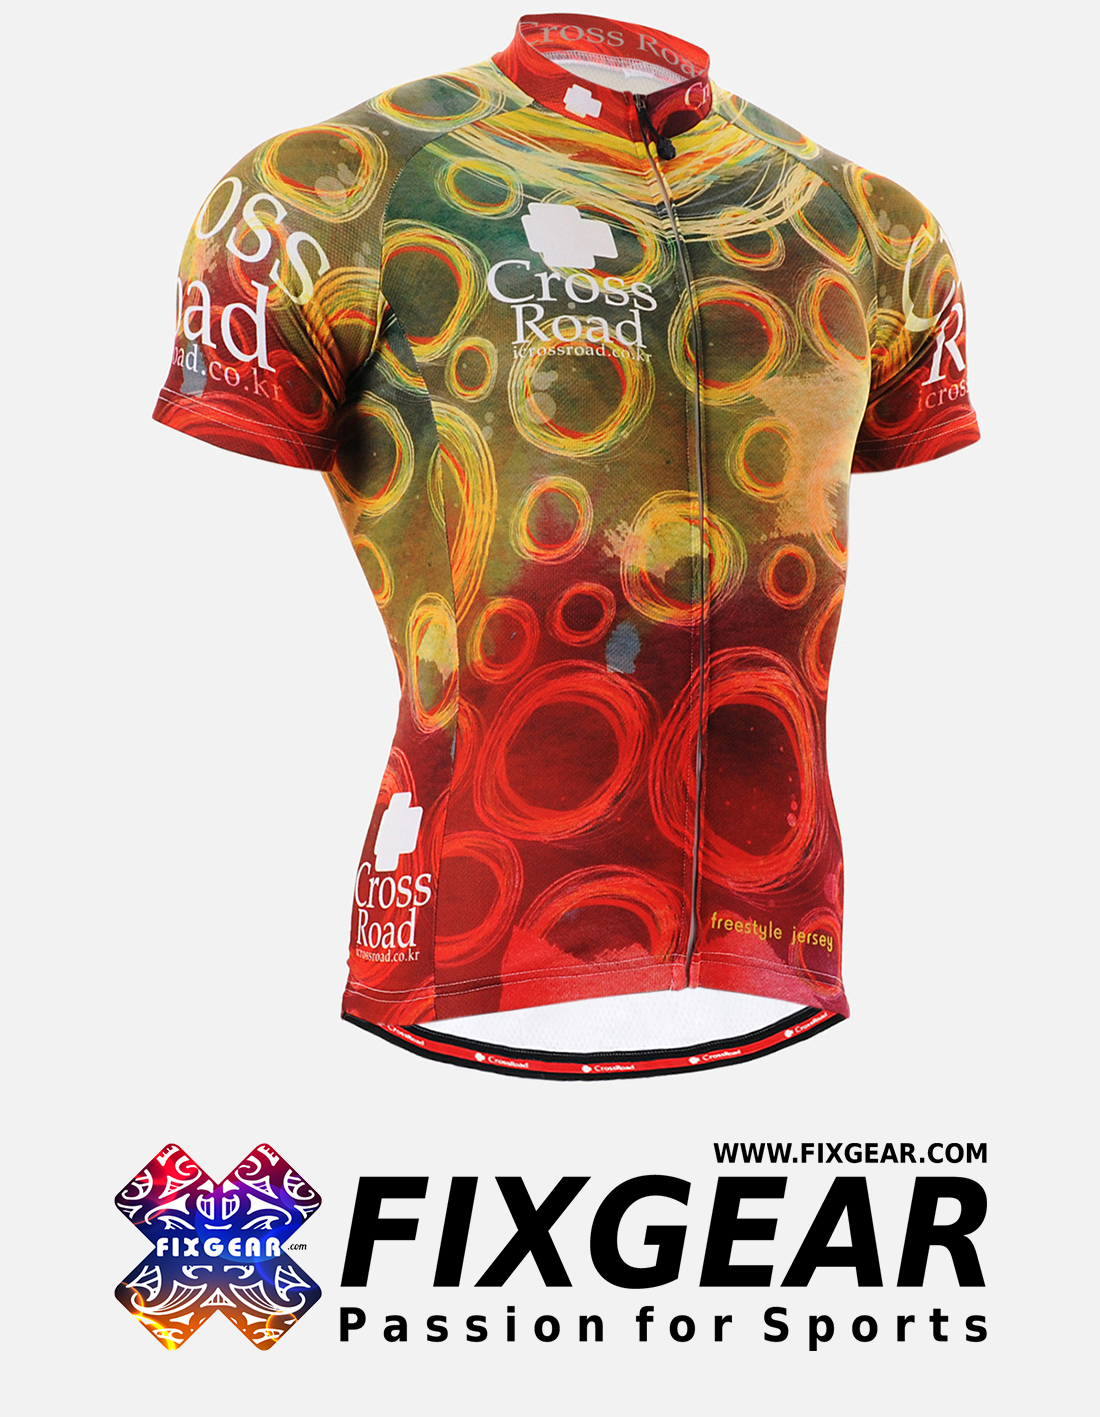 FIXGEAR CS-402 Men's Cycling  Jersey Short Sleeve